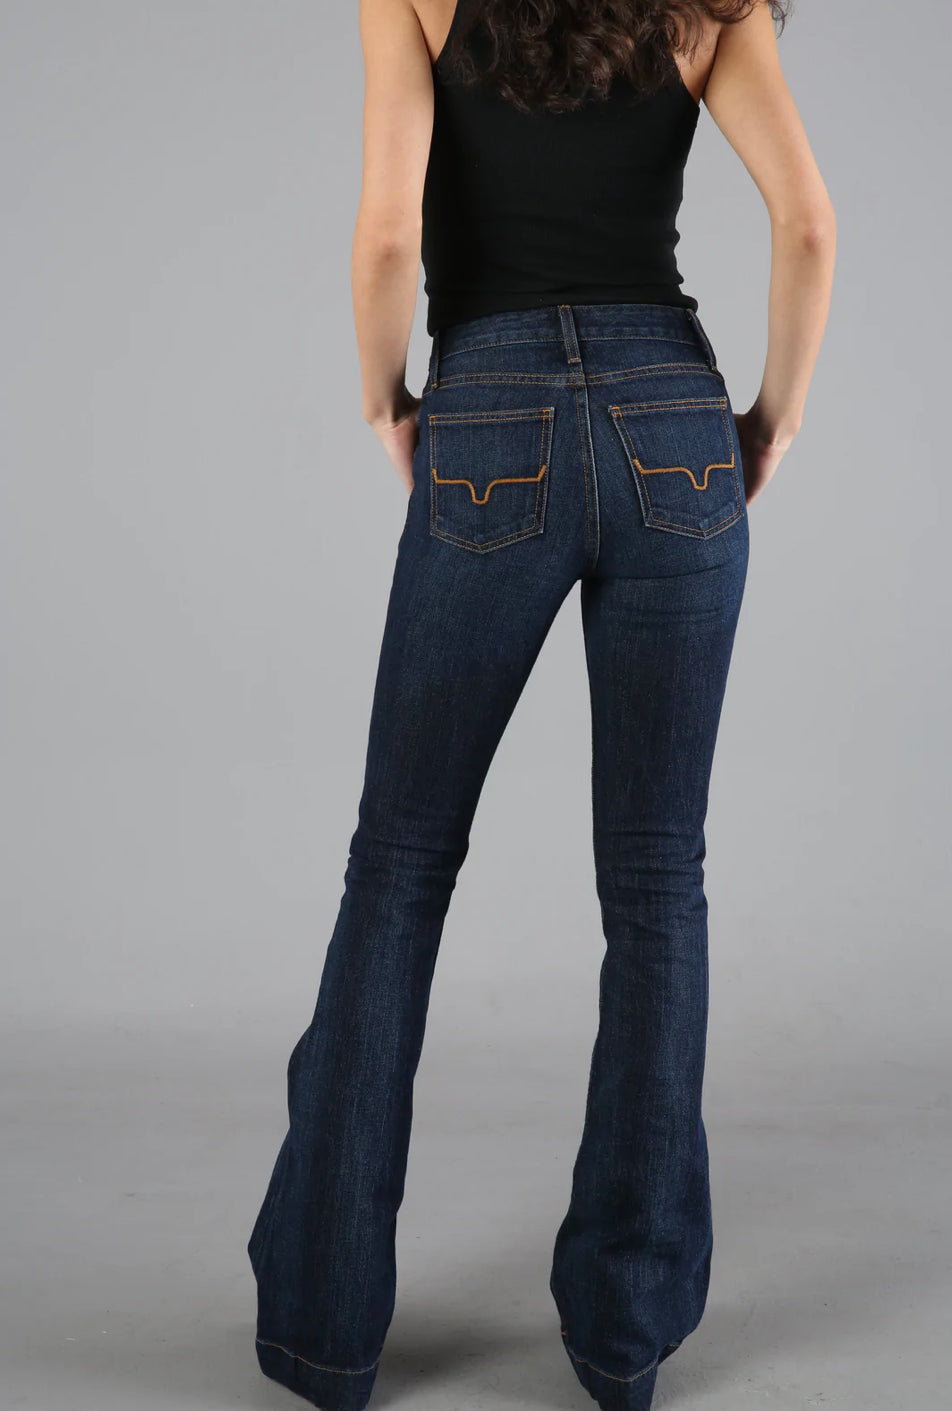 Kimes Jennifer Jeans